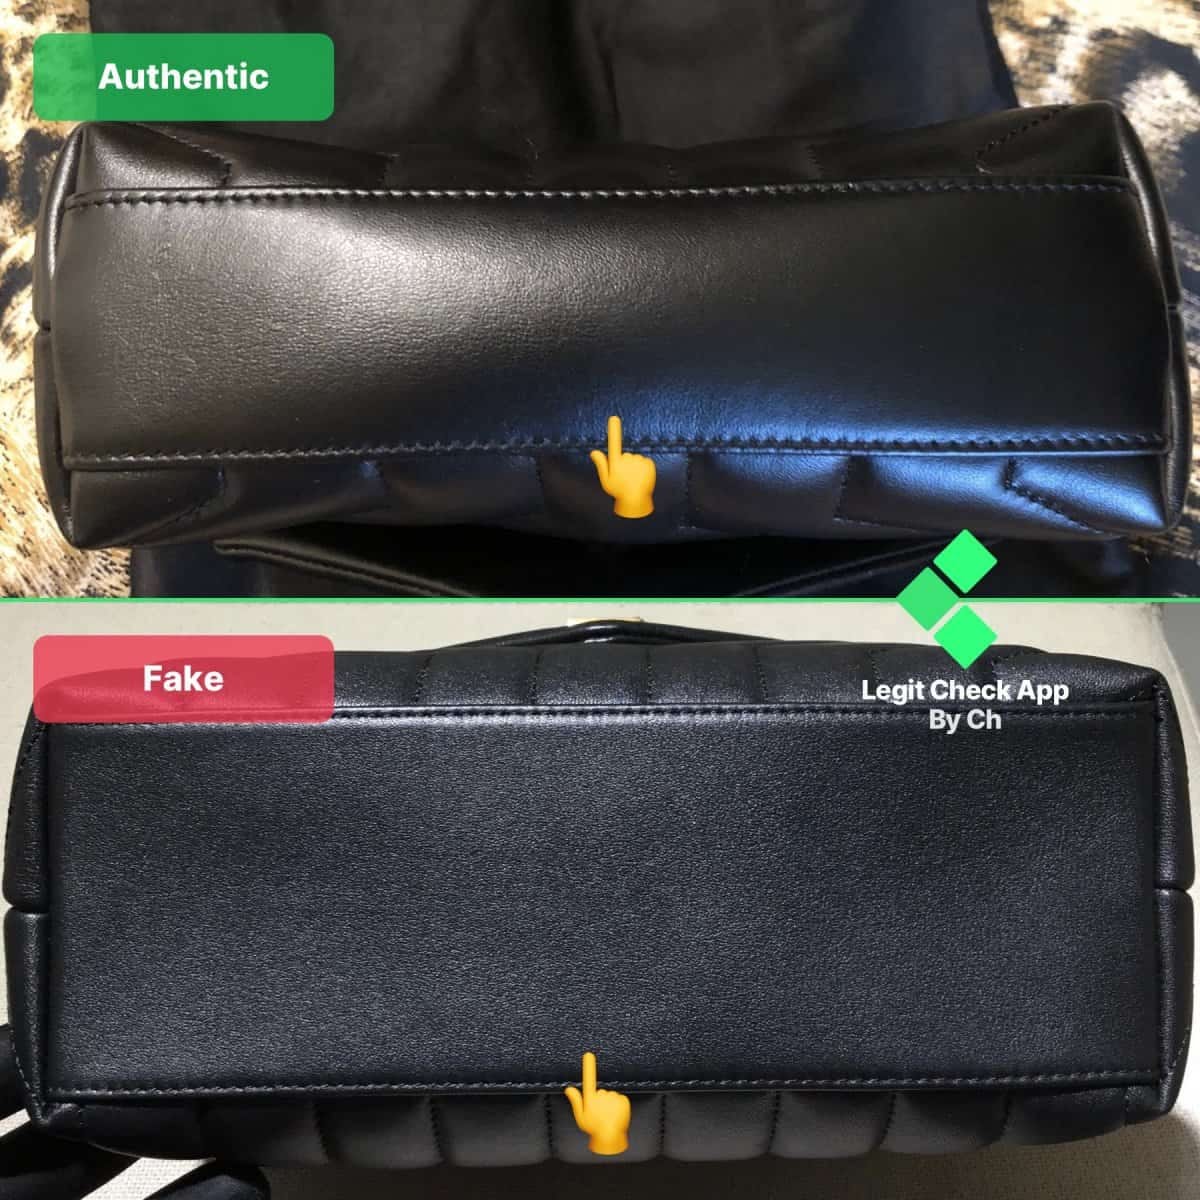 How to tell a fake vs genuine YSL bag